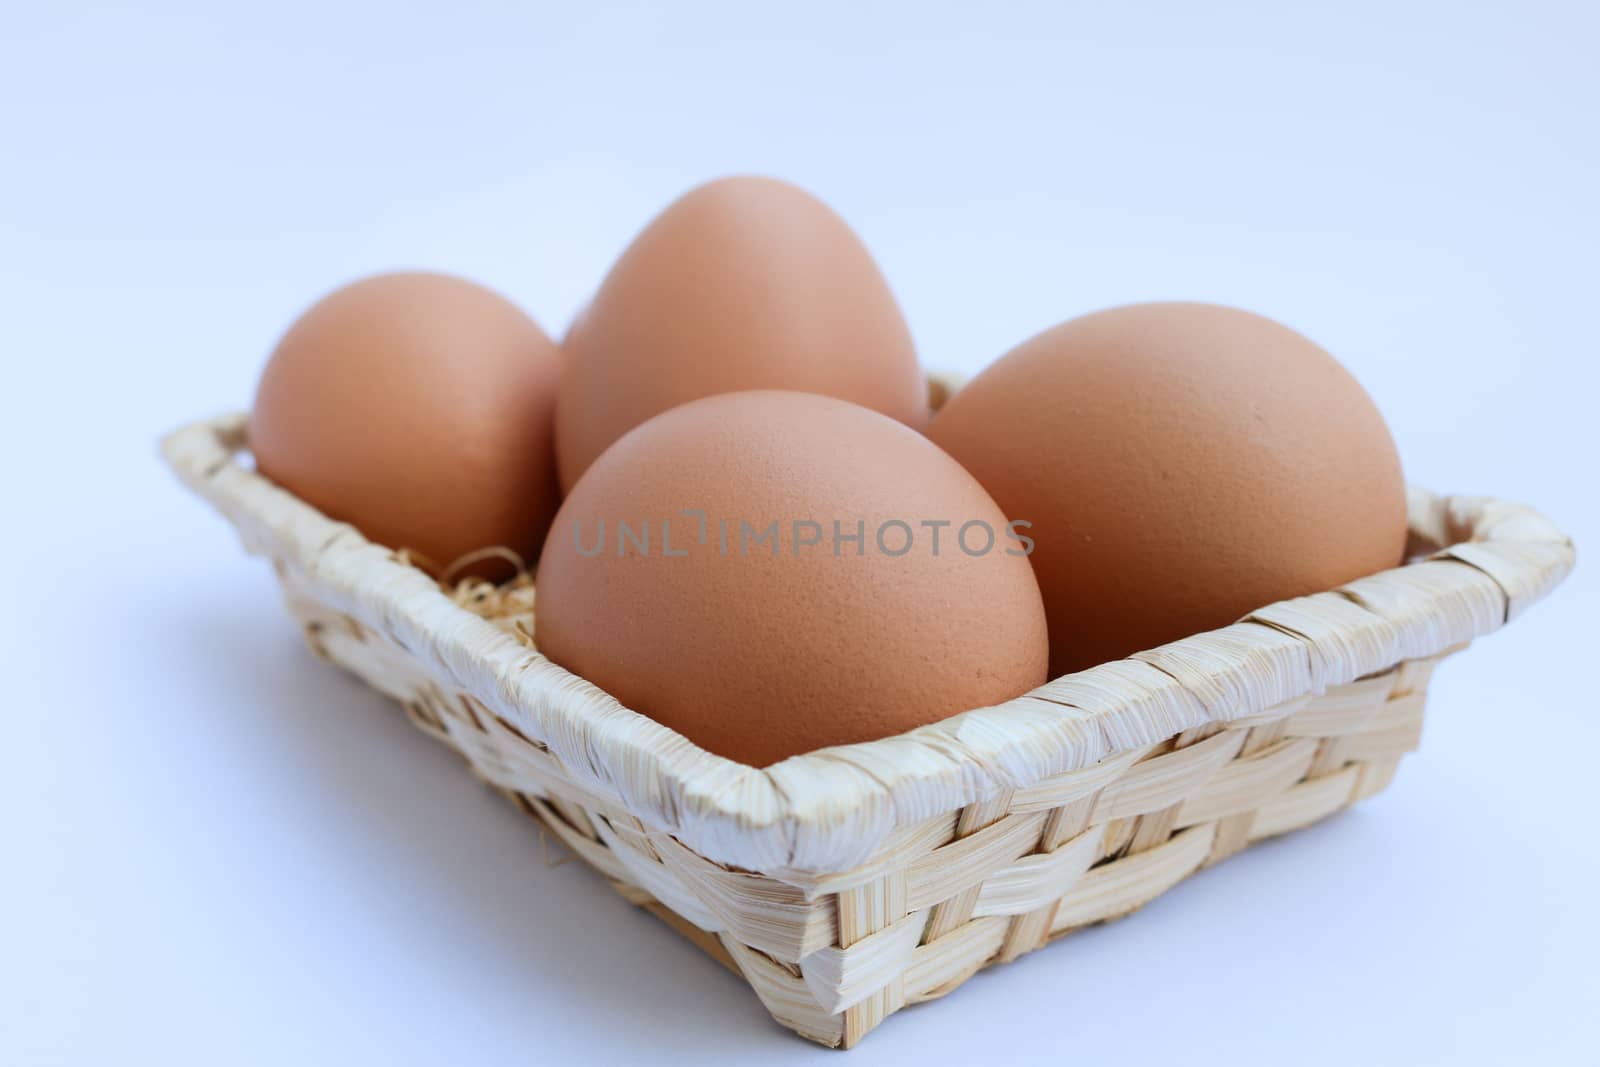 egg in basket wicker on white background